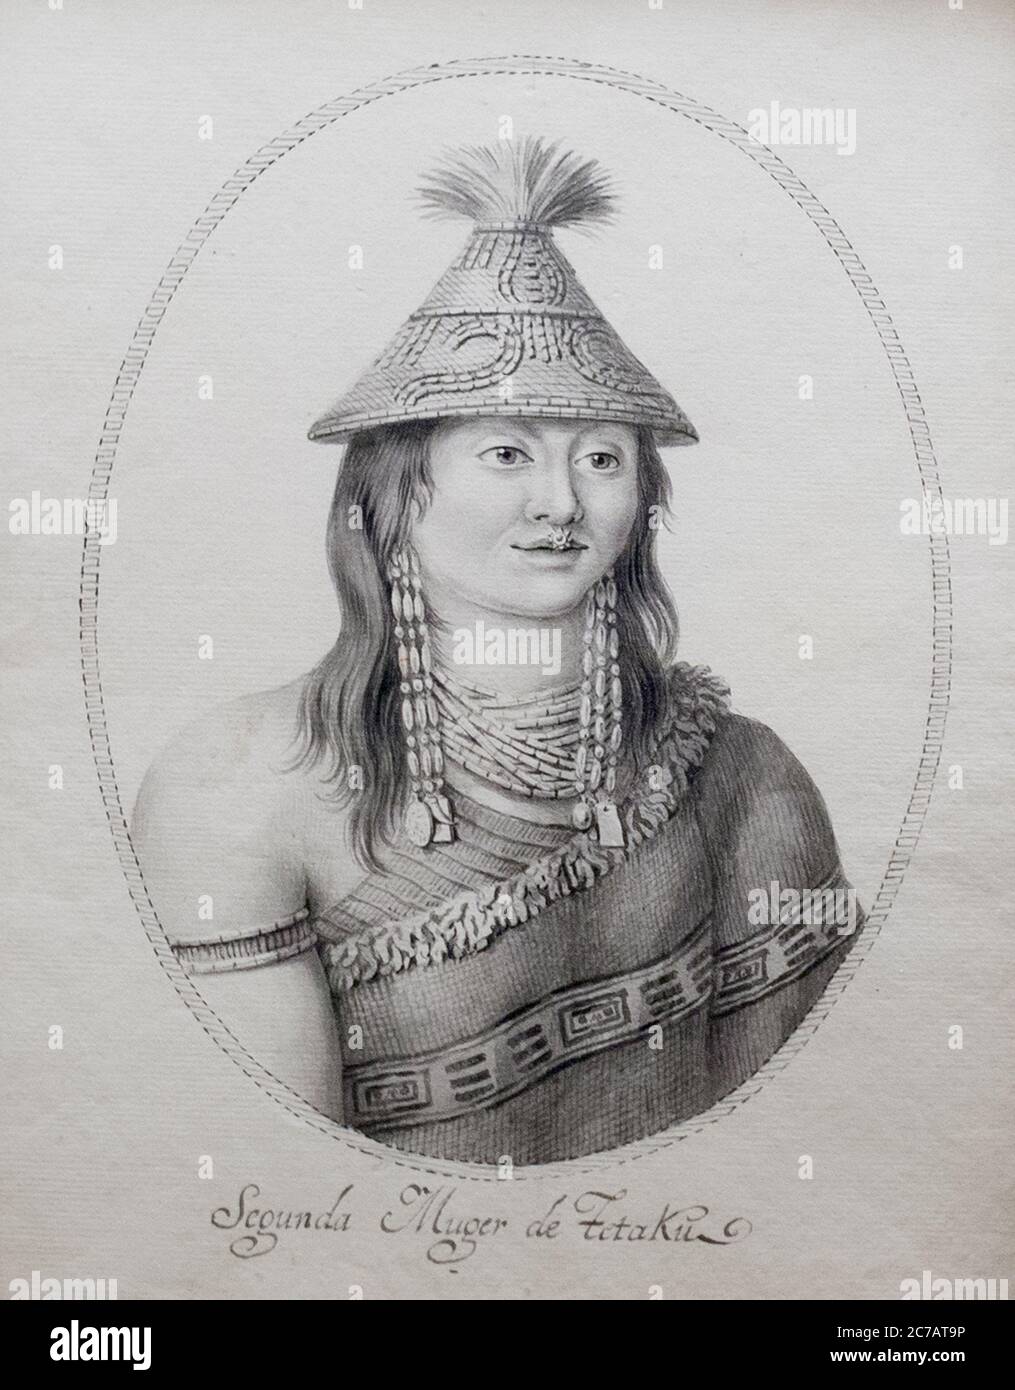 Tetaku zweite Frau, Porträt. Makah Chief, Olympic Peninsula im Bundesstaat Washington, indigene Bevölkerung. Gravur Stockfoto